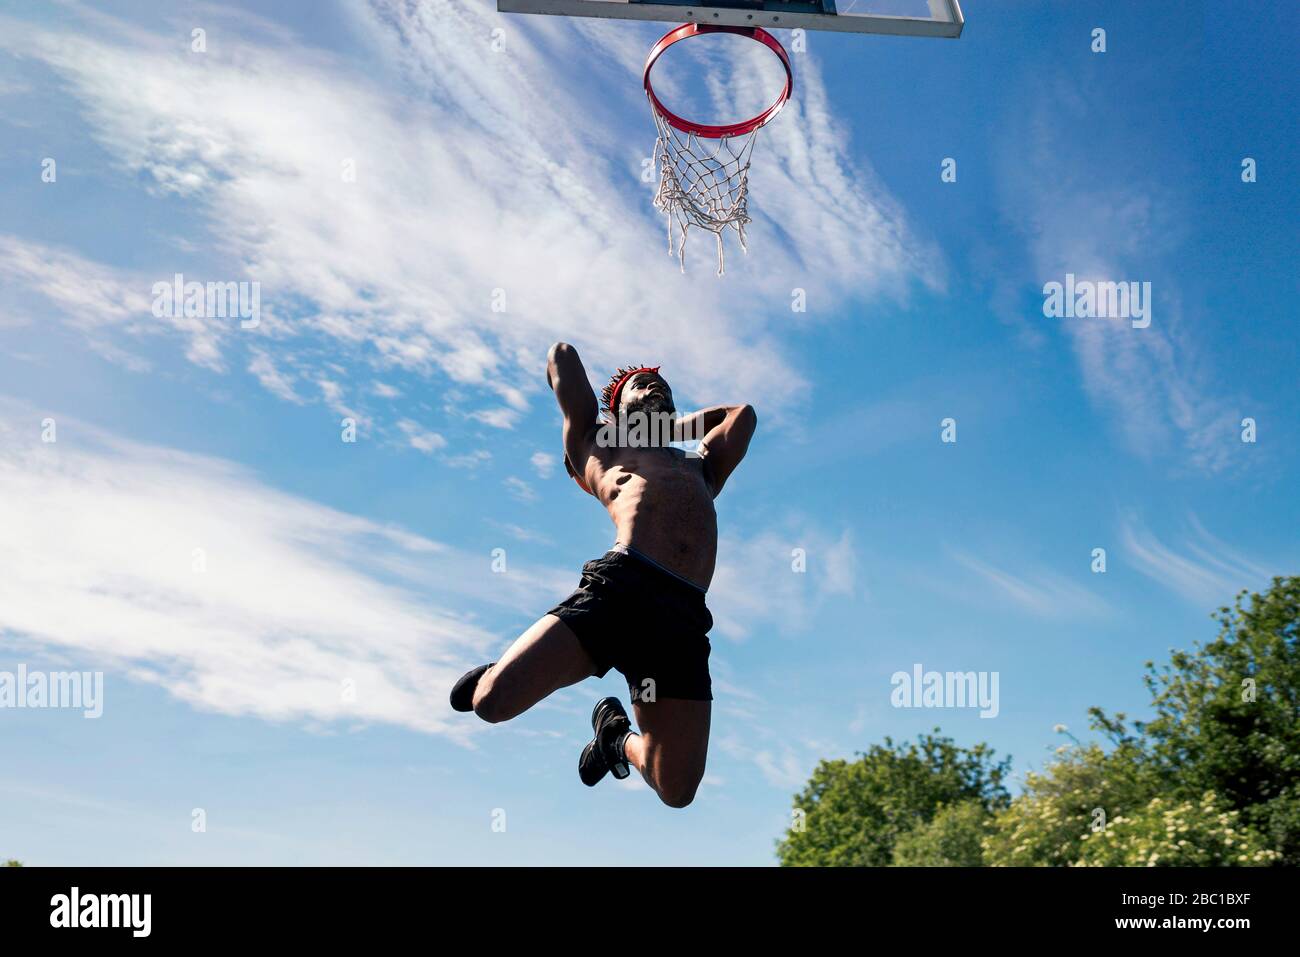 Man playing basketball, dunking Stock Photo